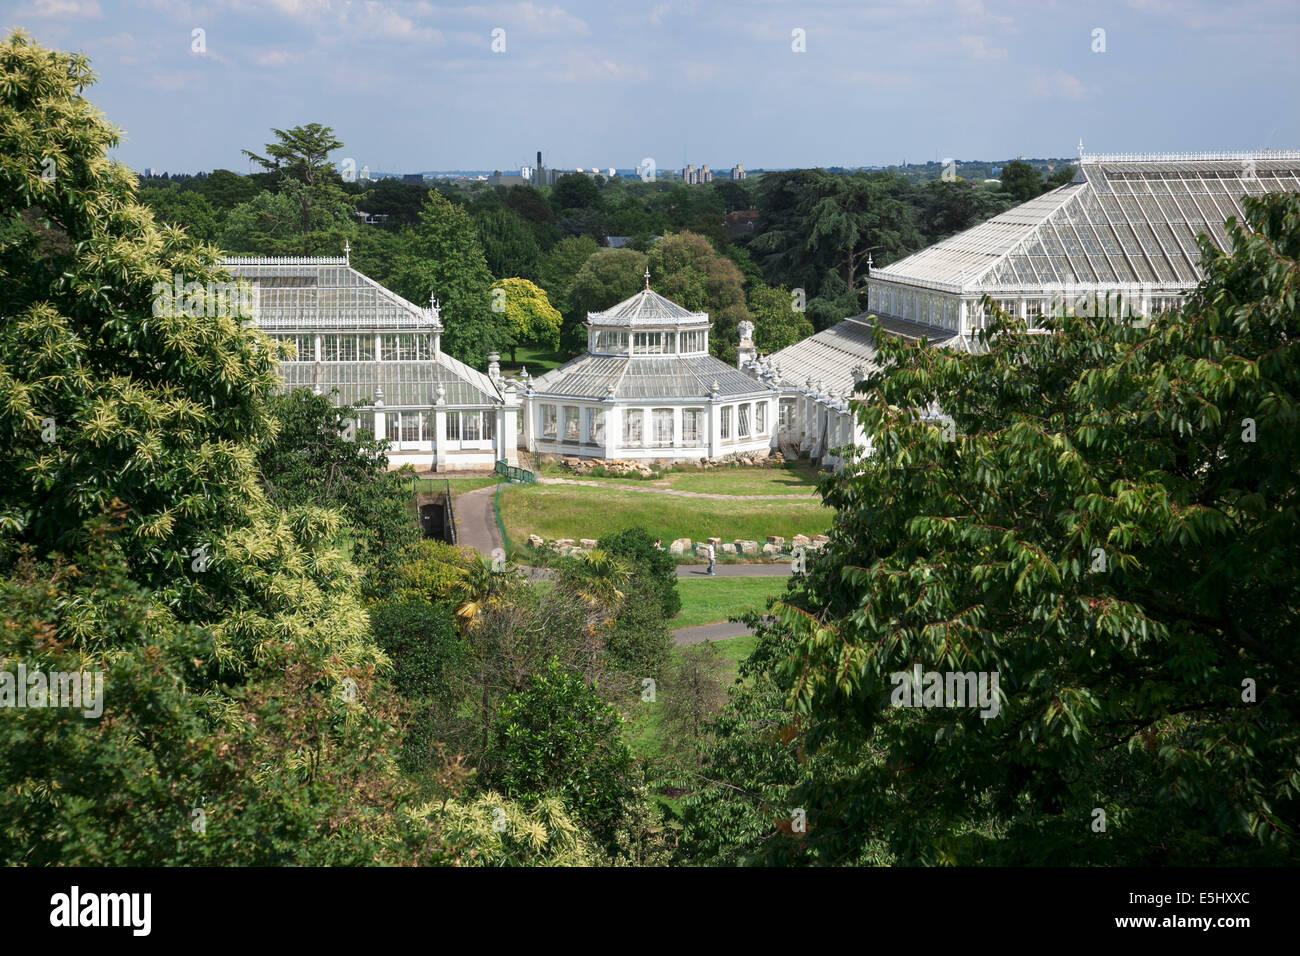 Vue d'Europe, maison de la Xstrata Treetop Walkway - Kew Gardens, Londres Banque D'Images